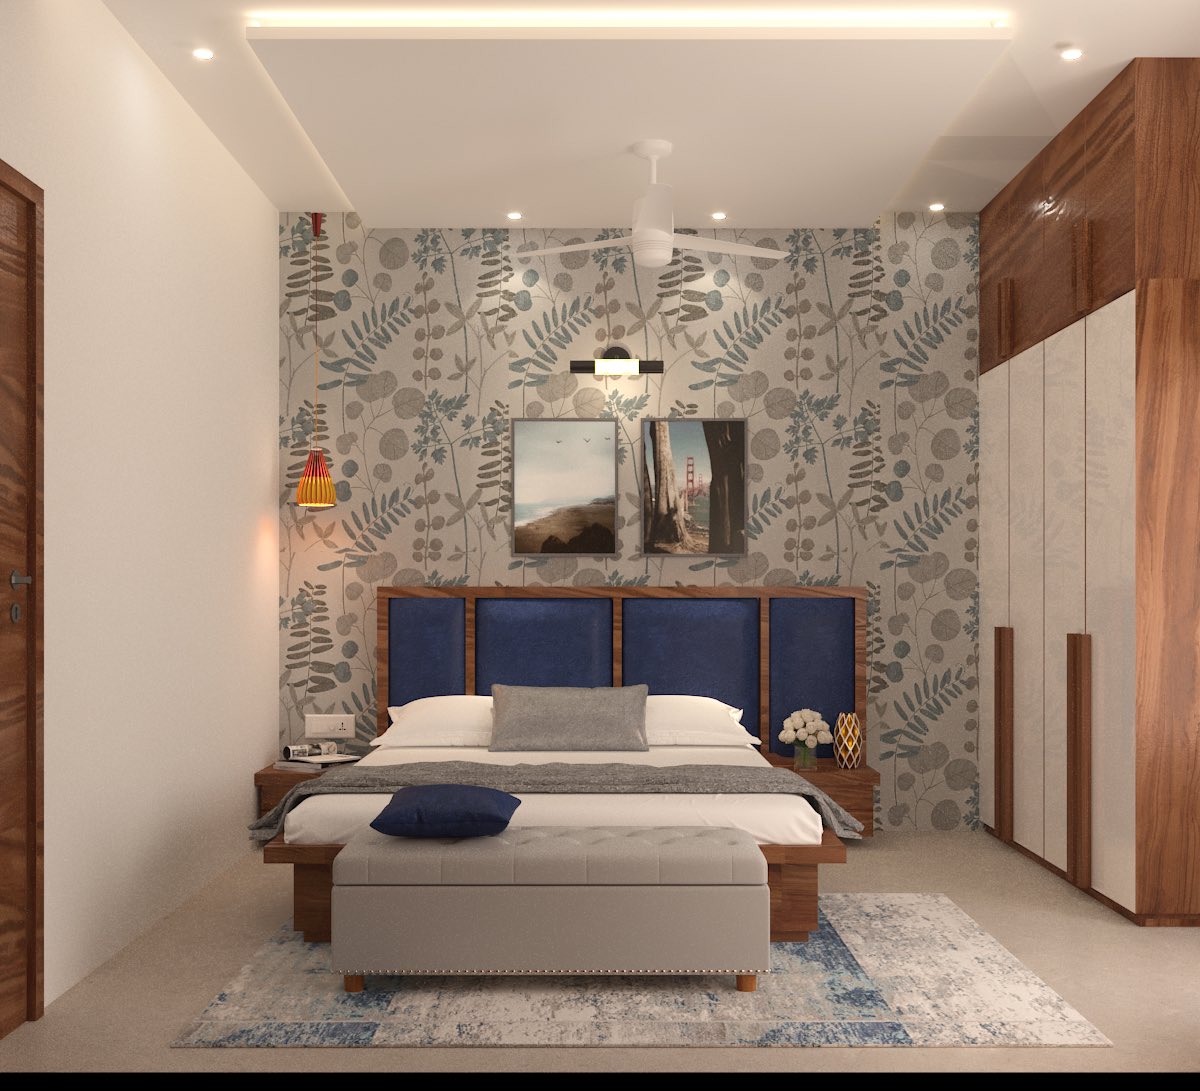 Master Bedroom.

#interiordesign #architecture #3dsmax #visual #decor #visualart #ceiling #luxury #luxurylifestyle #luxuryhomes #luxurious #decoration #homedecor #interior #cgi #marble #modern #wood #cgiartist  #lighting #texture #material #landscape  #minimalism